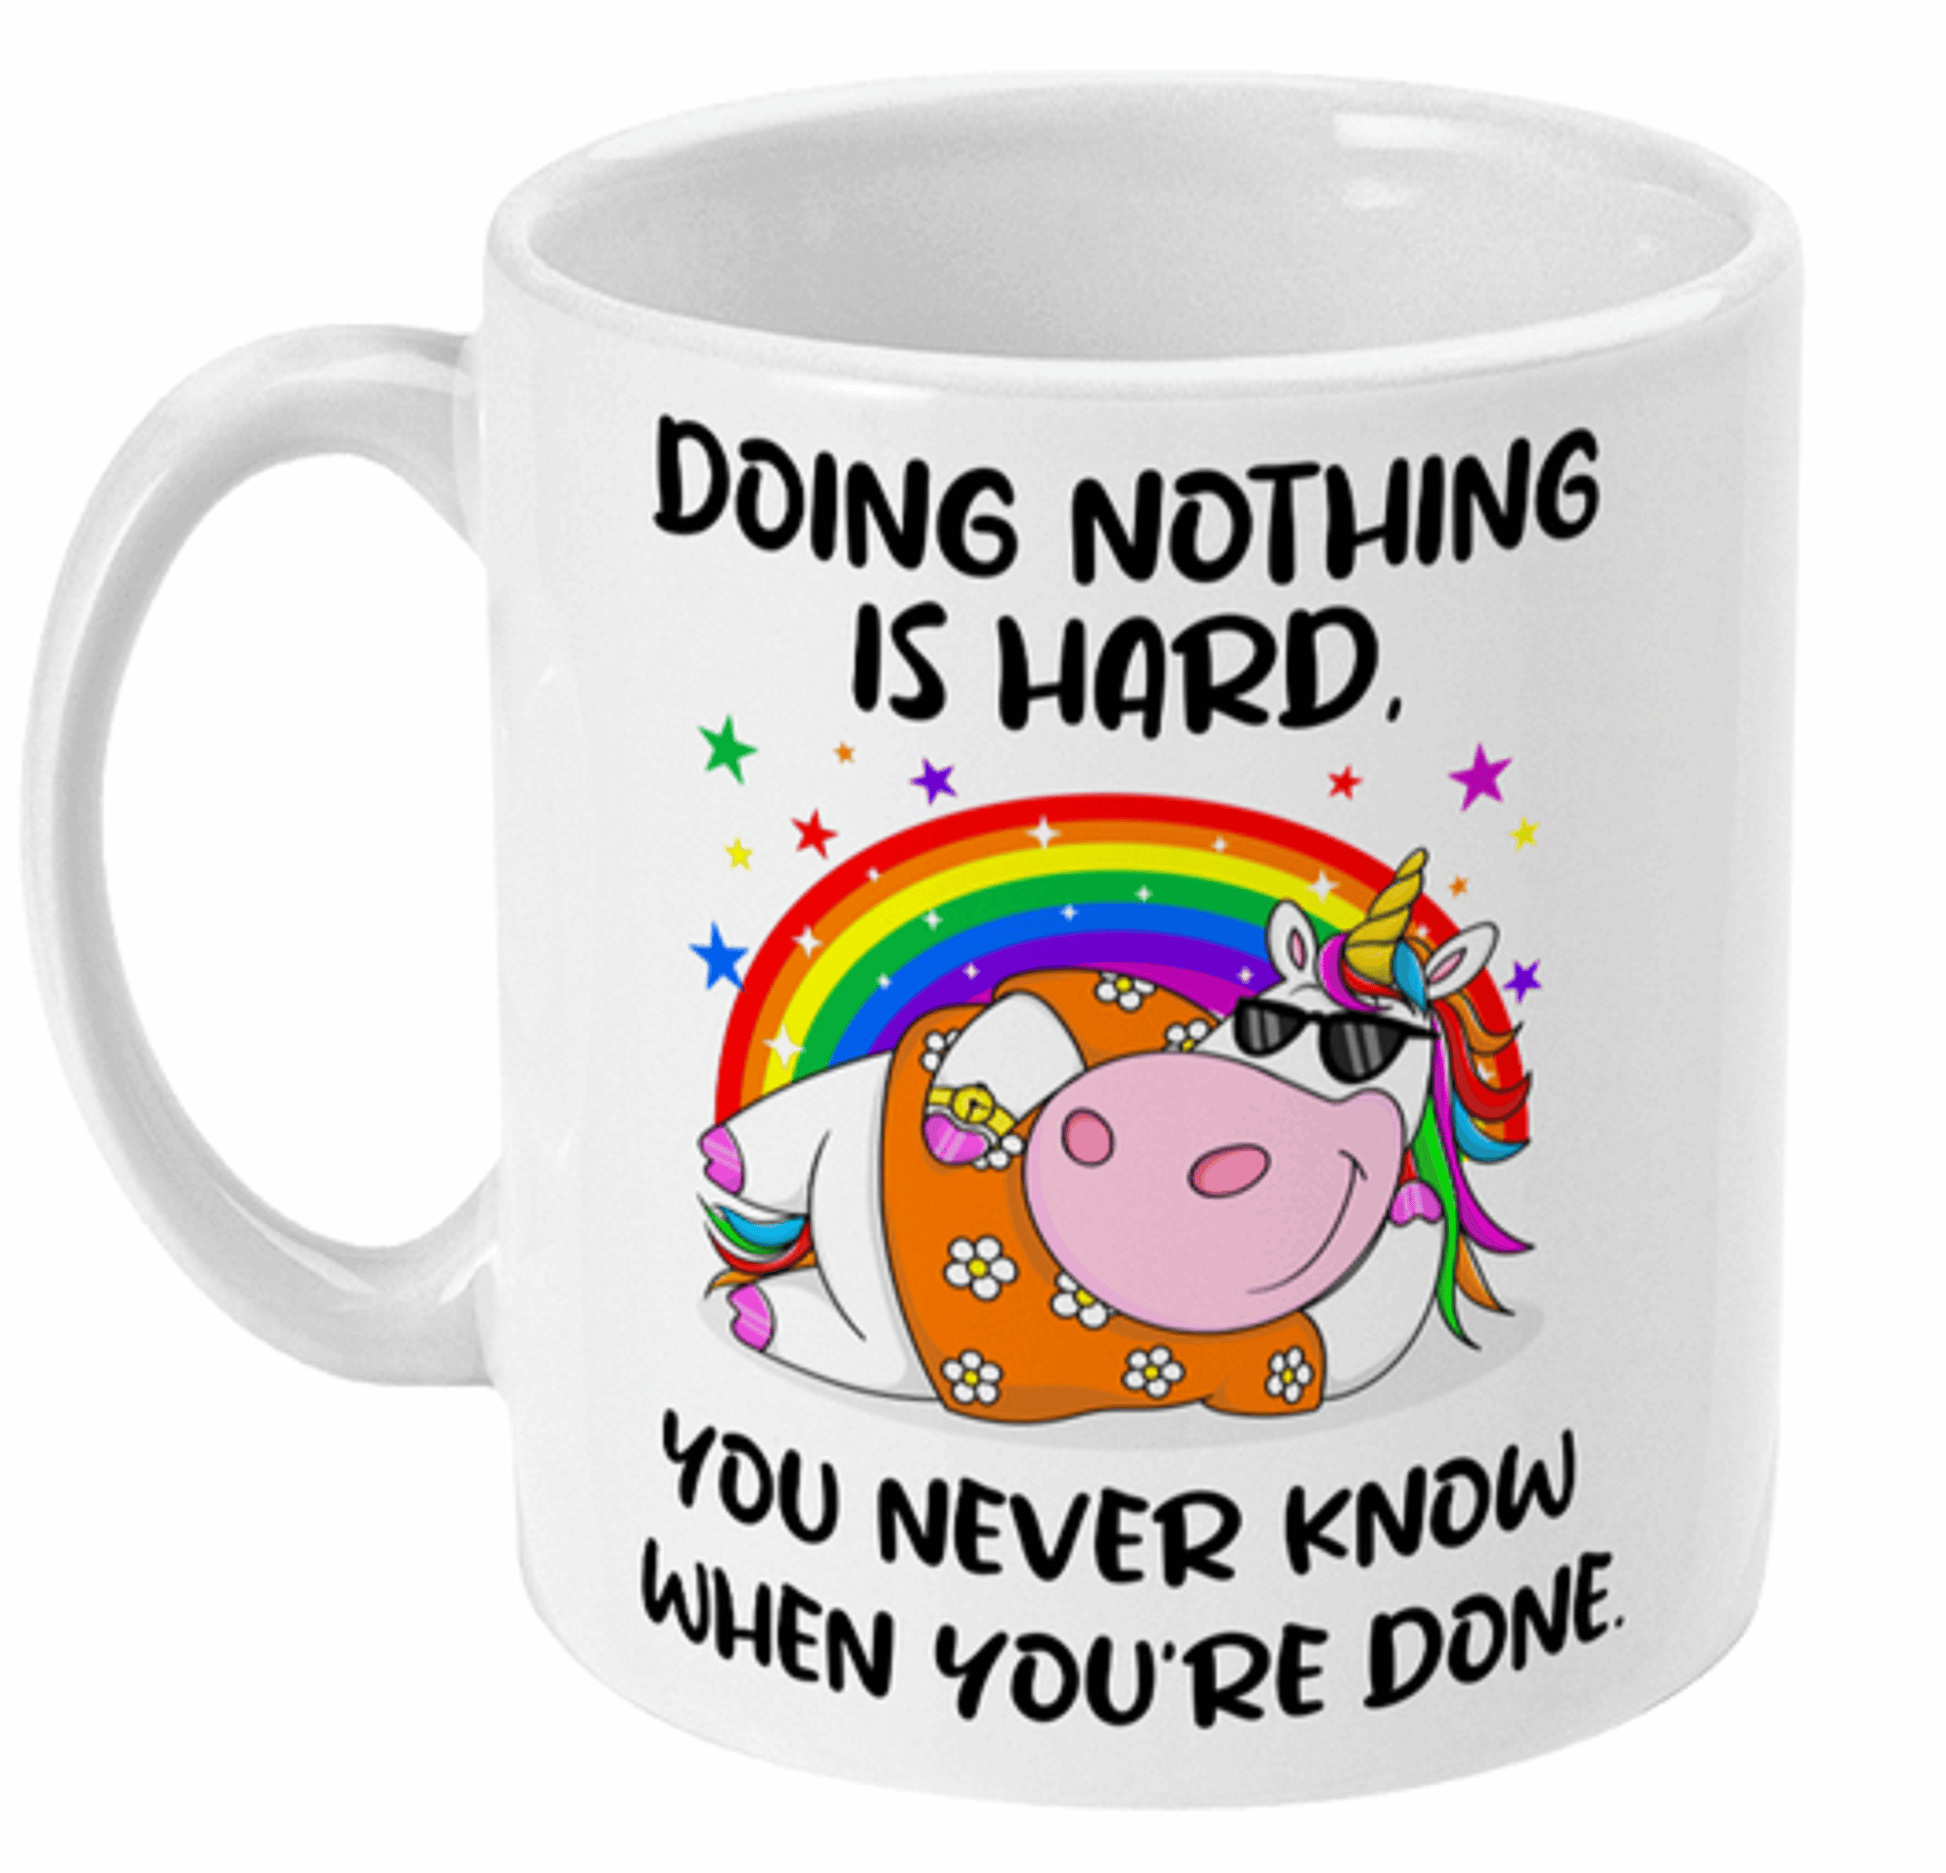  Doing Nothing is Hard Unicorn Coffee Mug by Free Spirit Accessories sold by Free Spirit Accessories